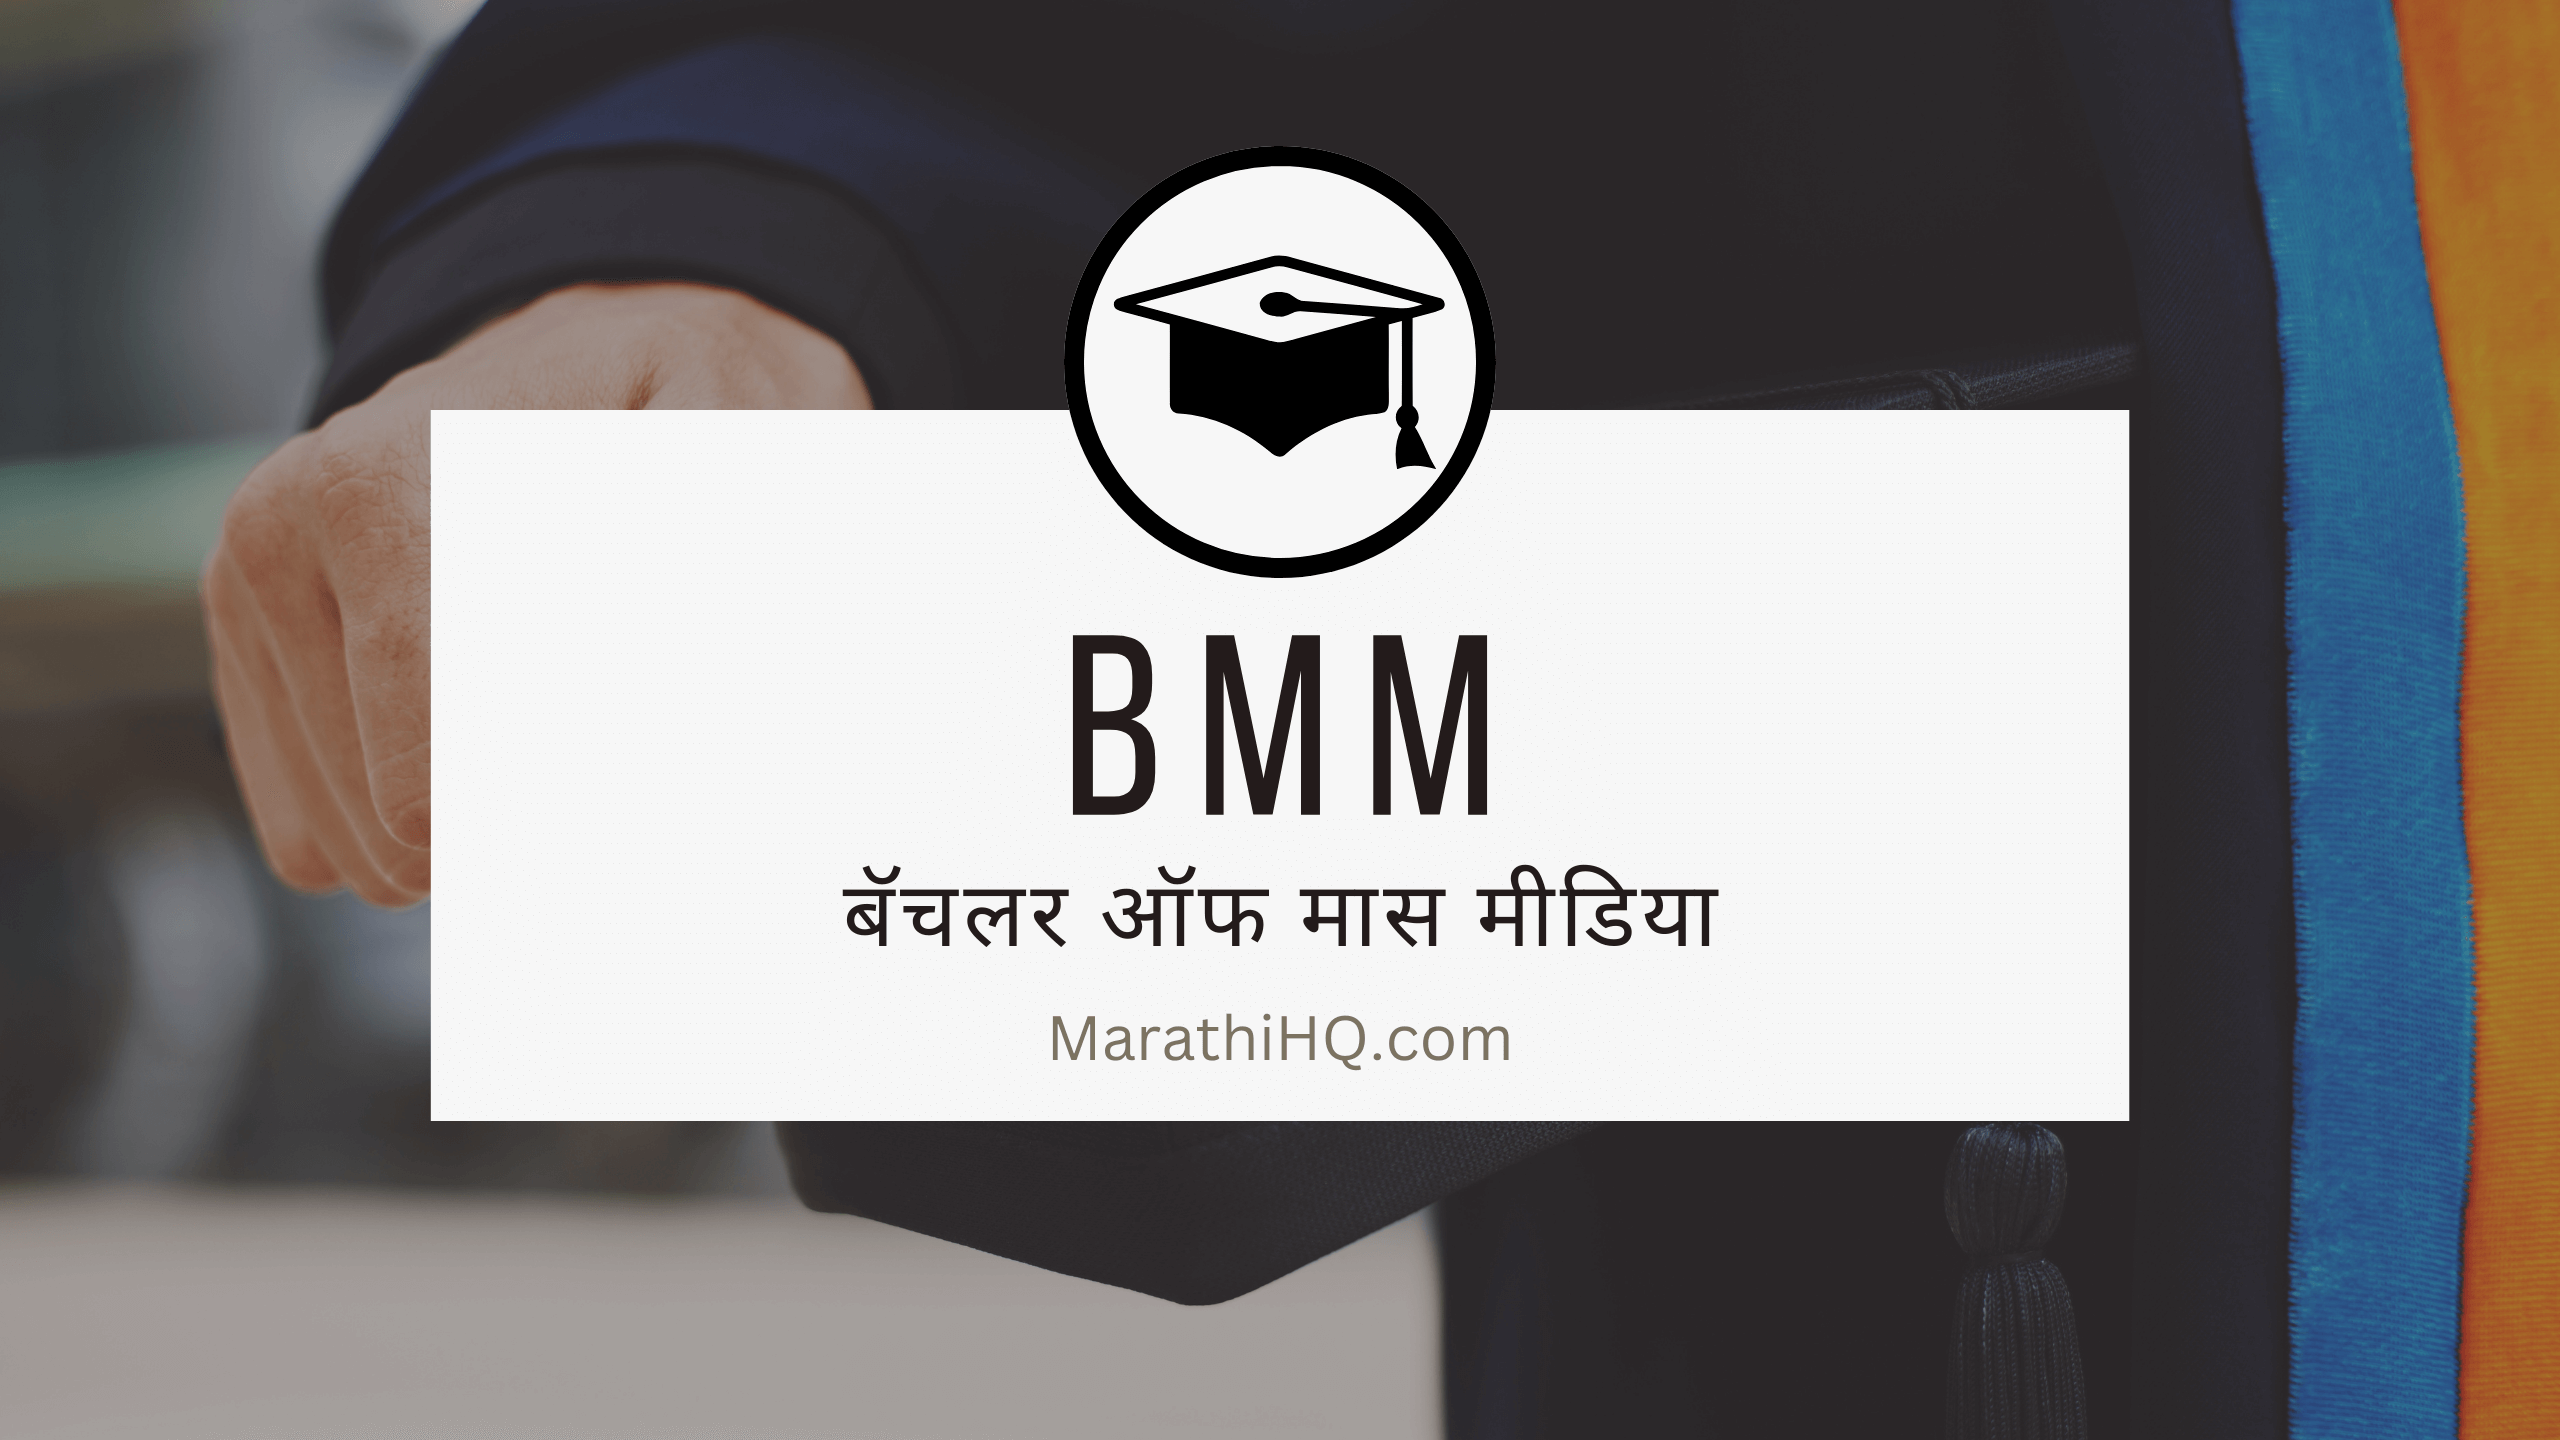 BMM कोर्स माहिती | BMM Course Information in Marathi